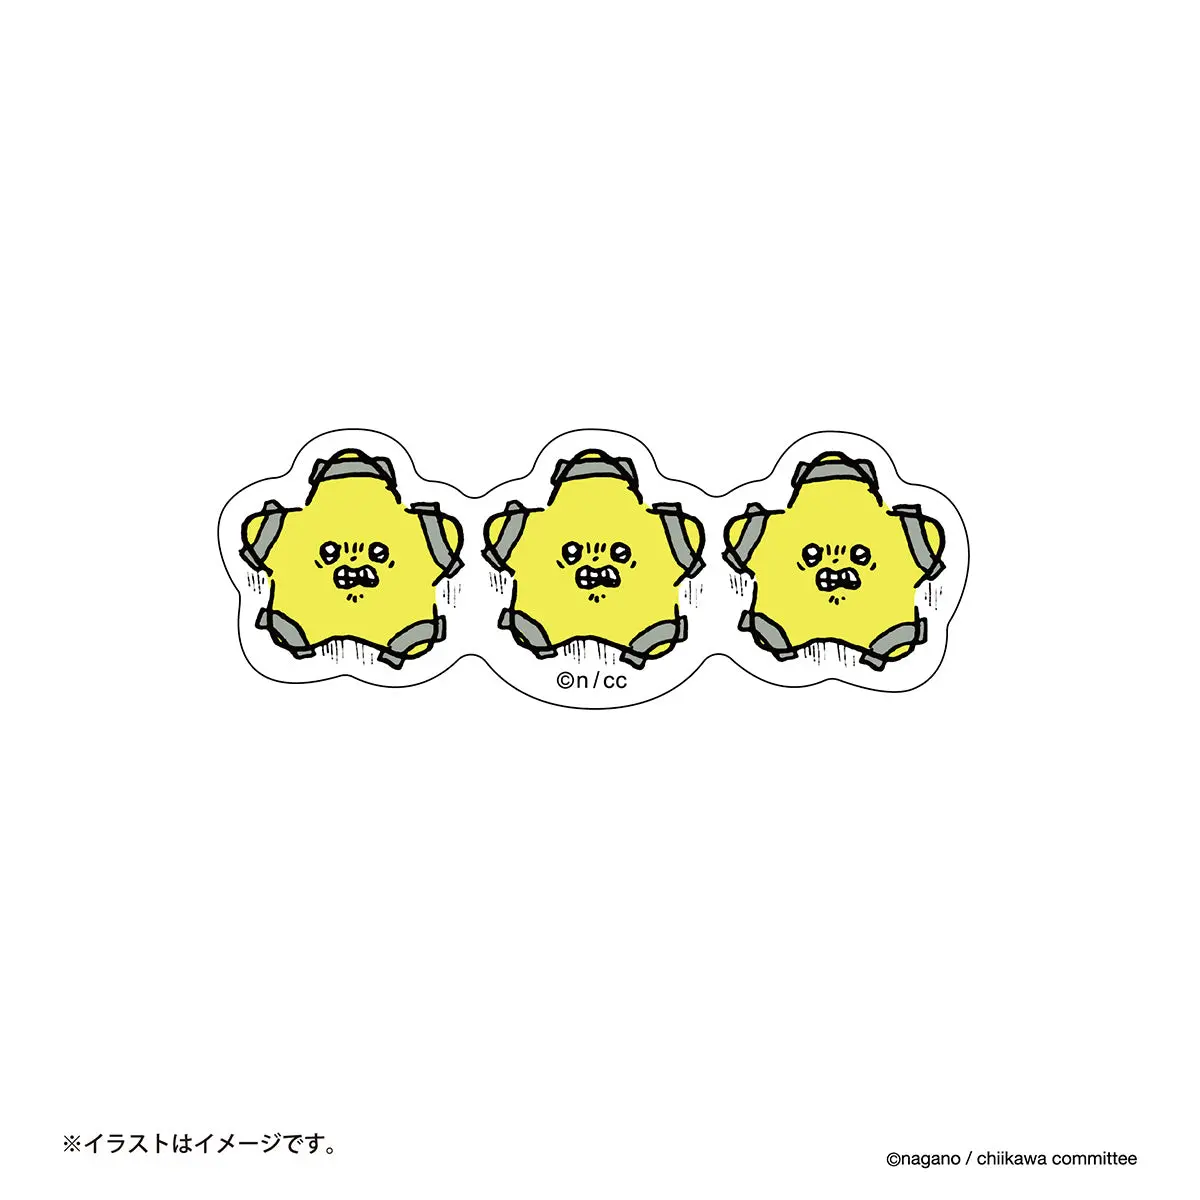 Chiikawa Stickers Just right for Smartphone - Chiikawa / Shooting star